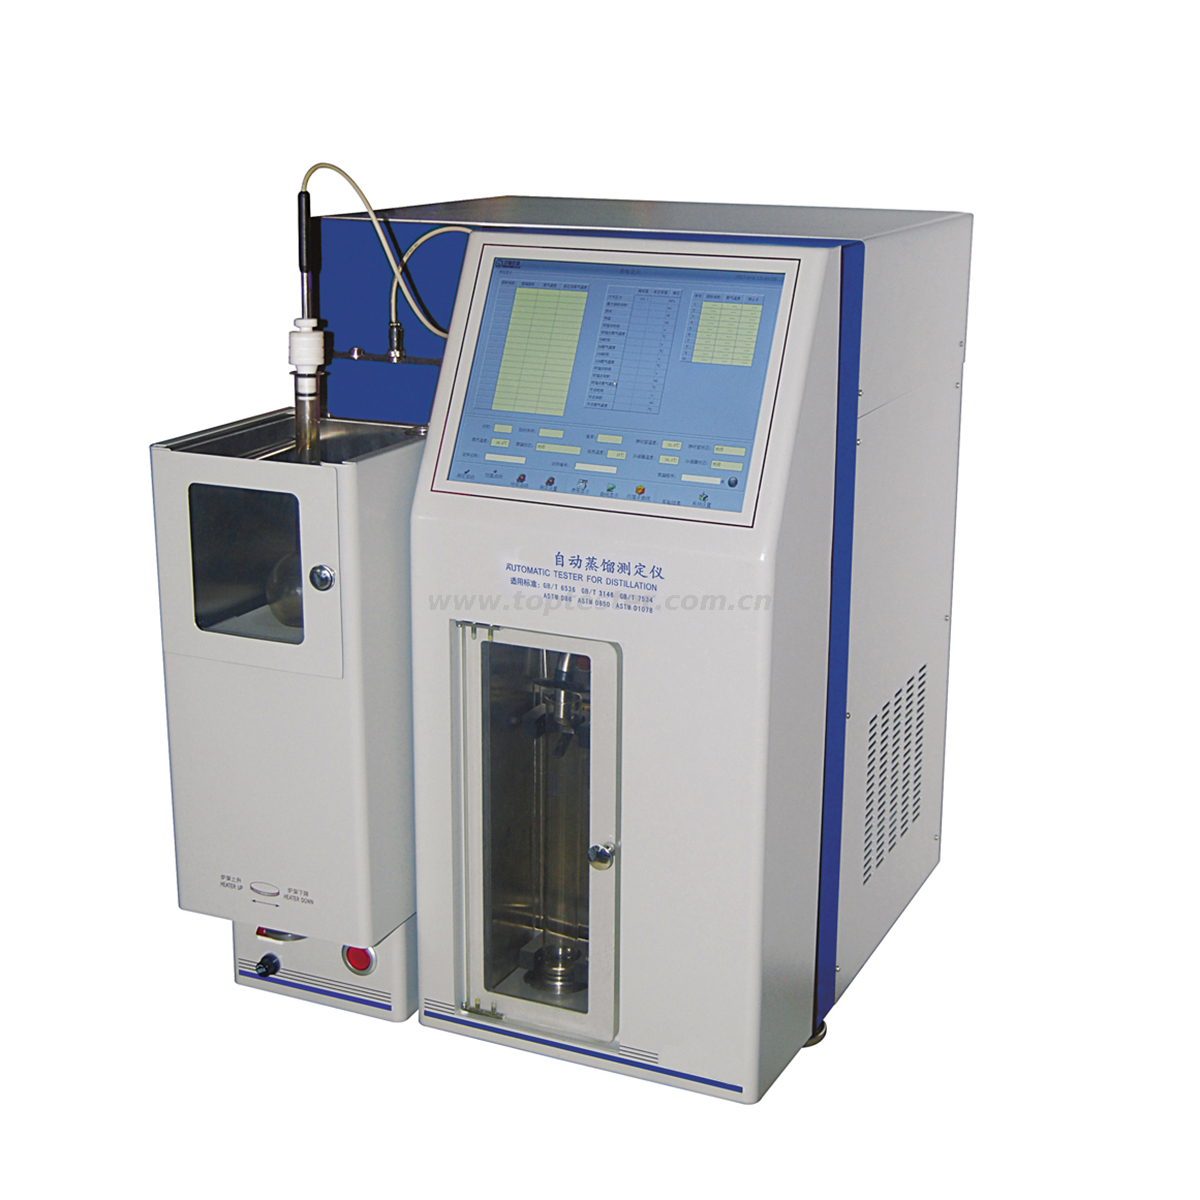 ASTM D86 Automatic Distillation Tester Model DIL-100Z